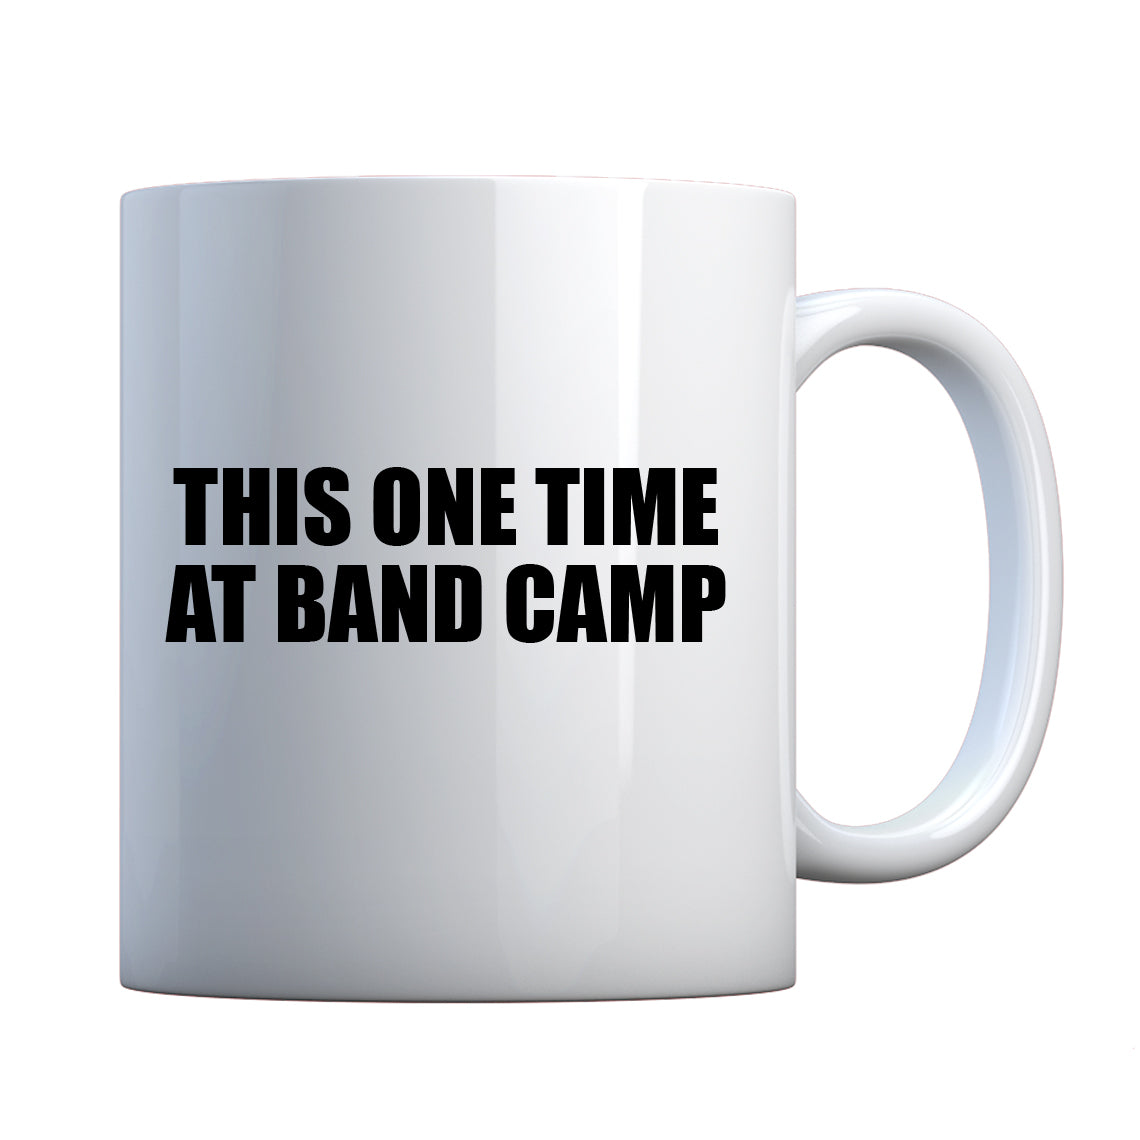 This One Time at Band Camp Ceramic Gift Mug